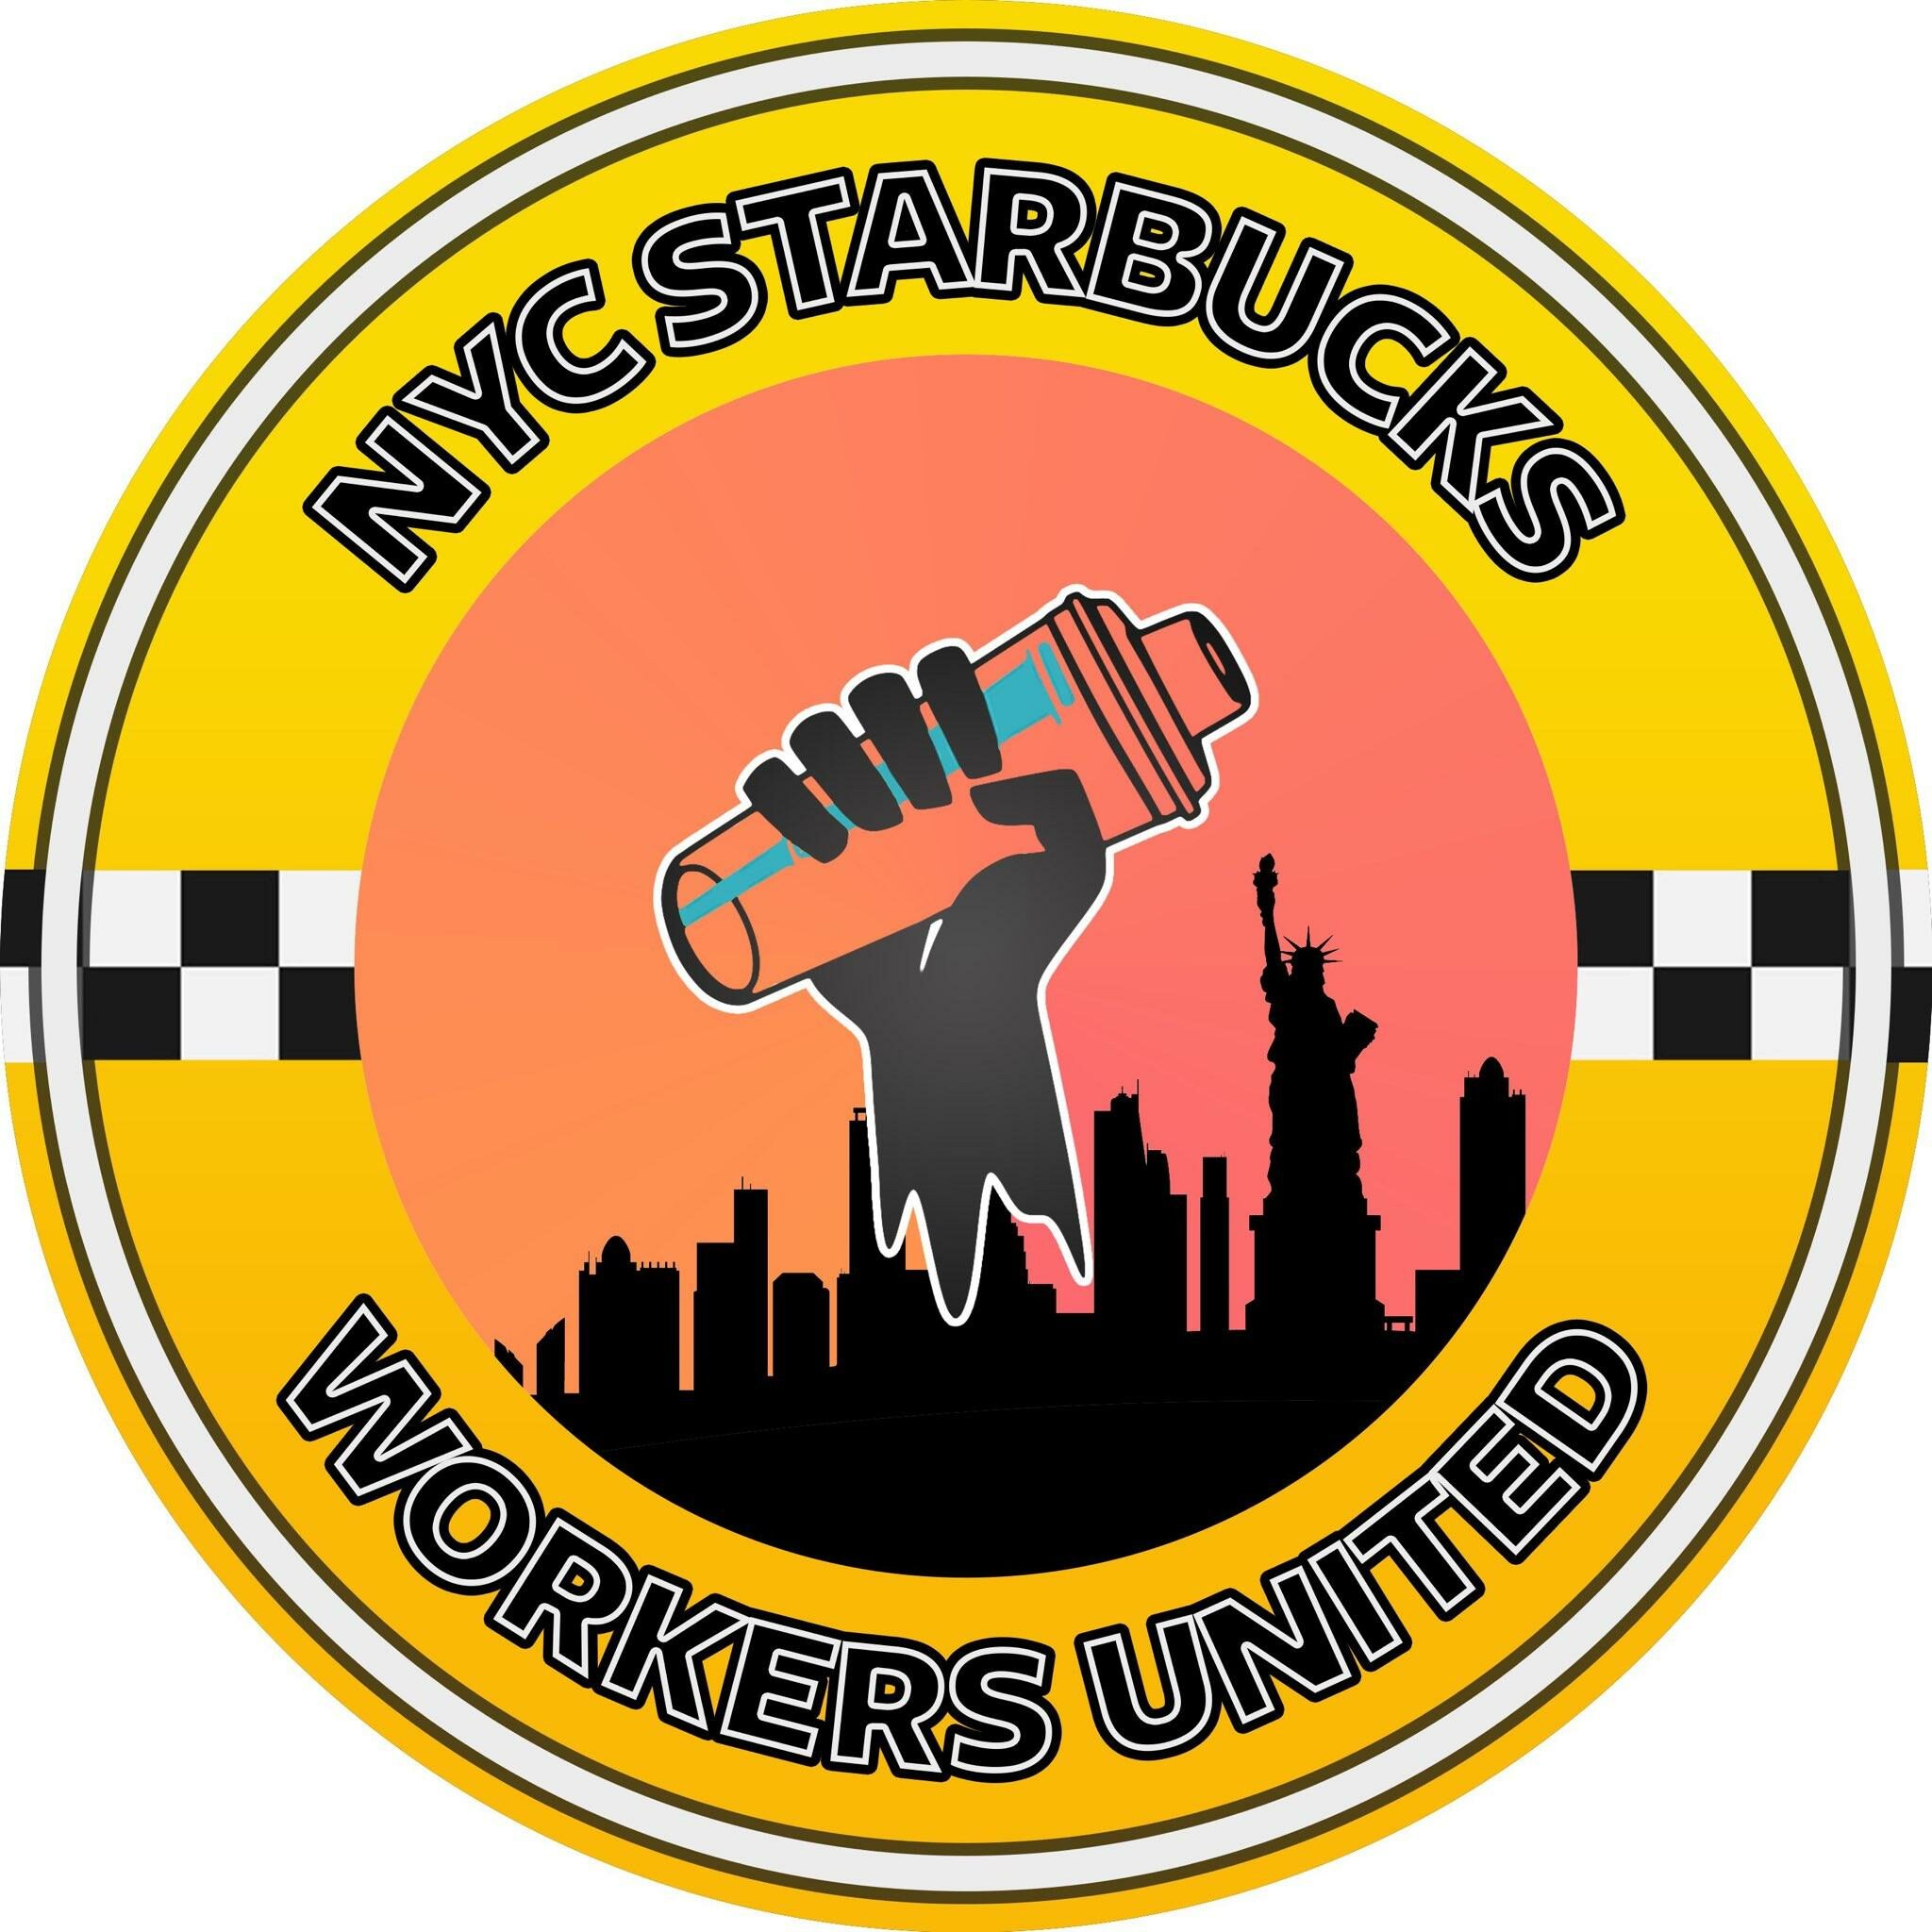 Copy of NYC SBWU logo